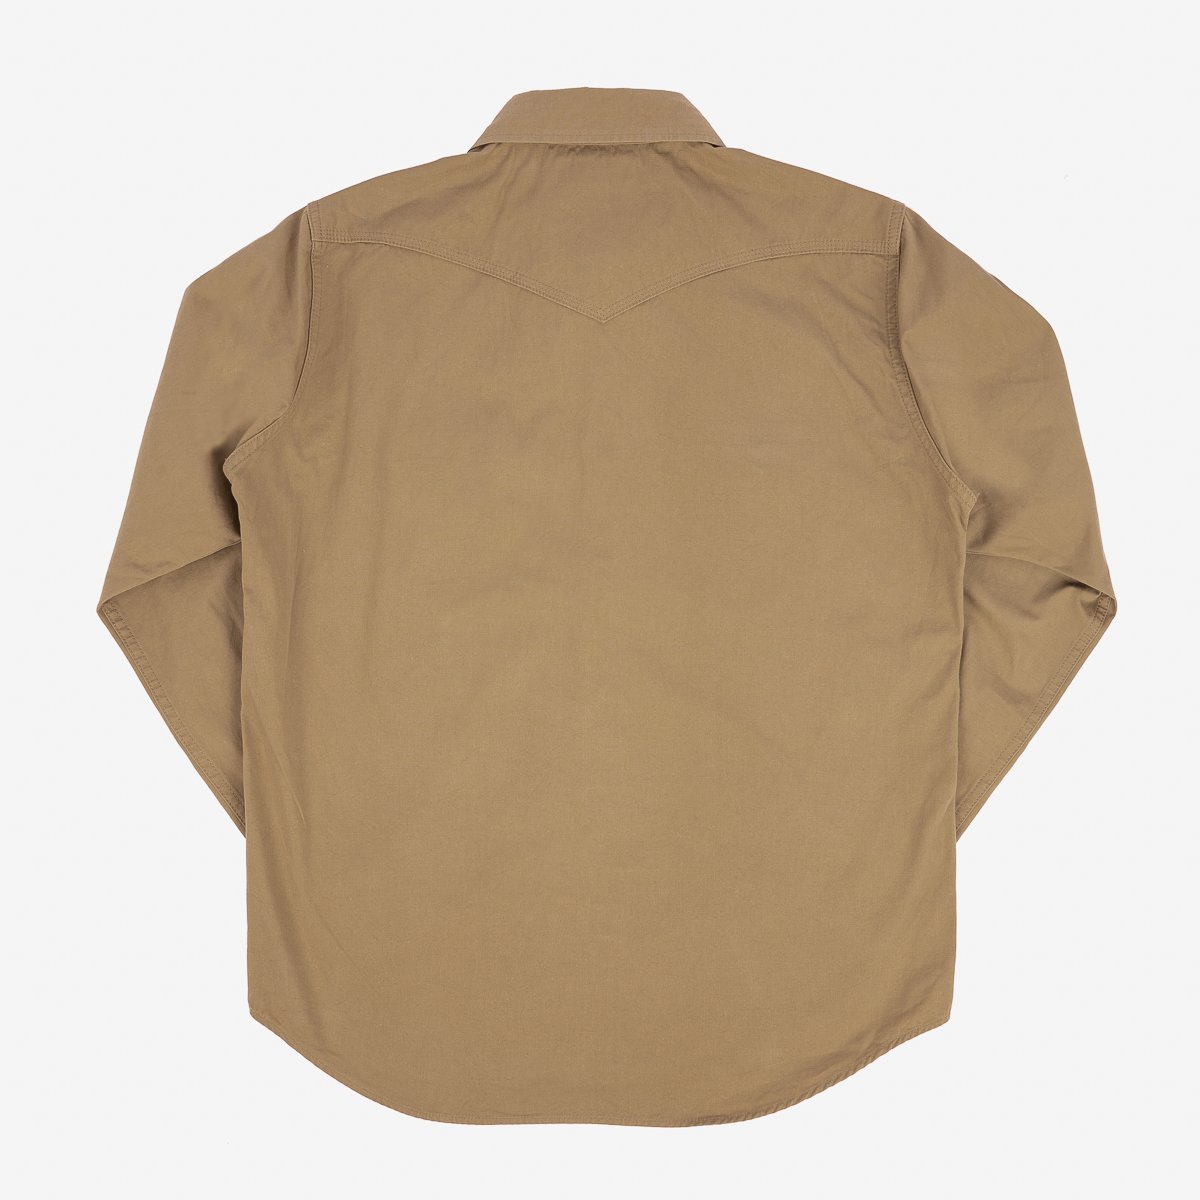 Iron Heart IHSH-394-KHA 7oz Fatigue Cloth Western Shirt - Khaki